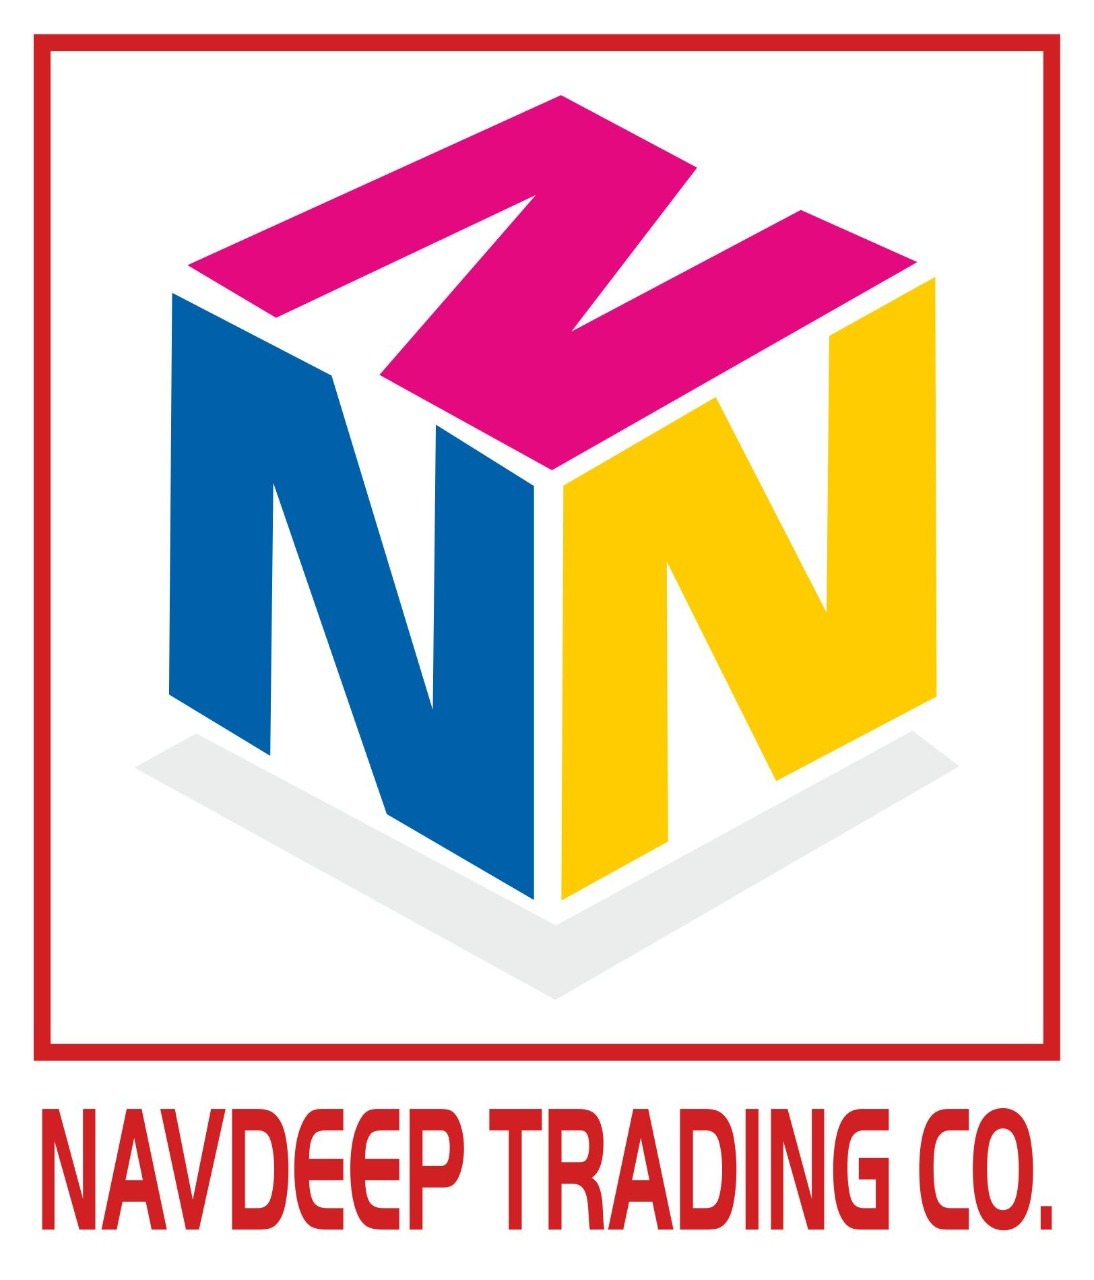 Navdeep trading